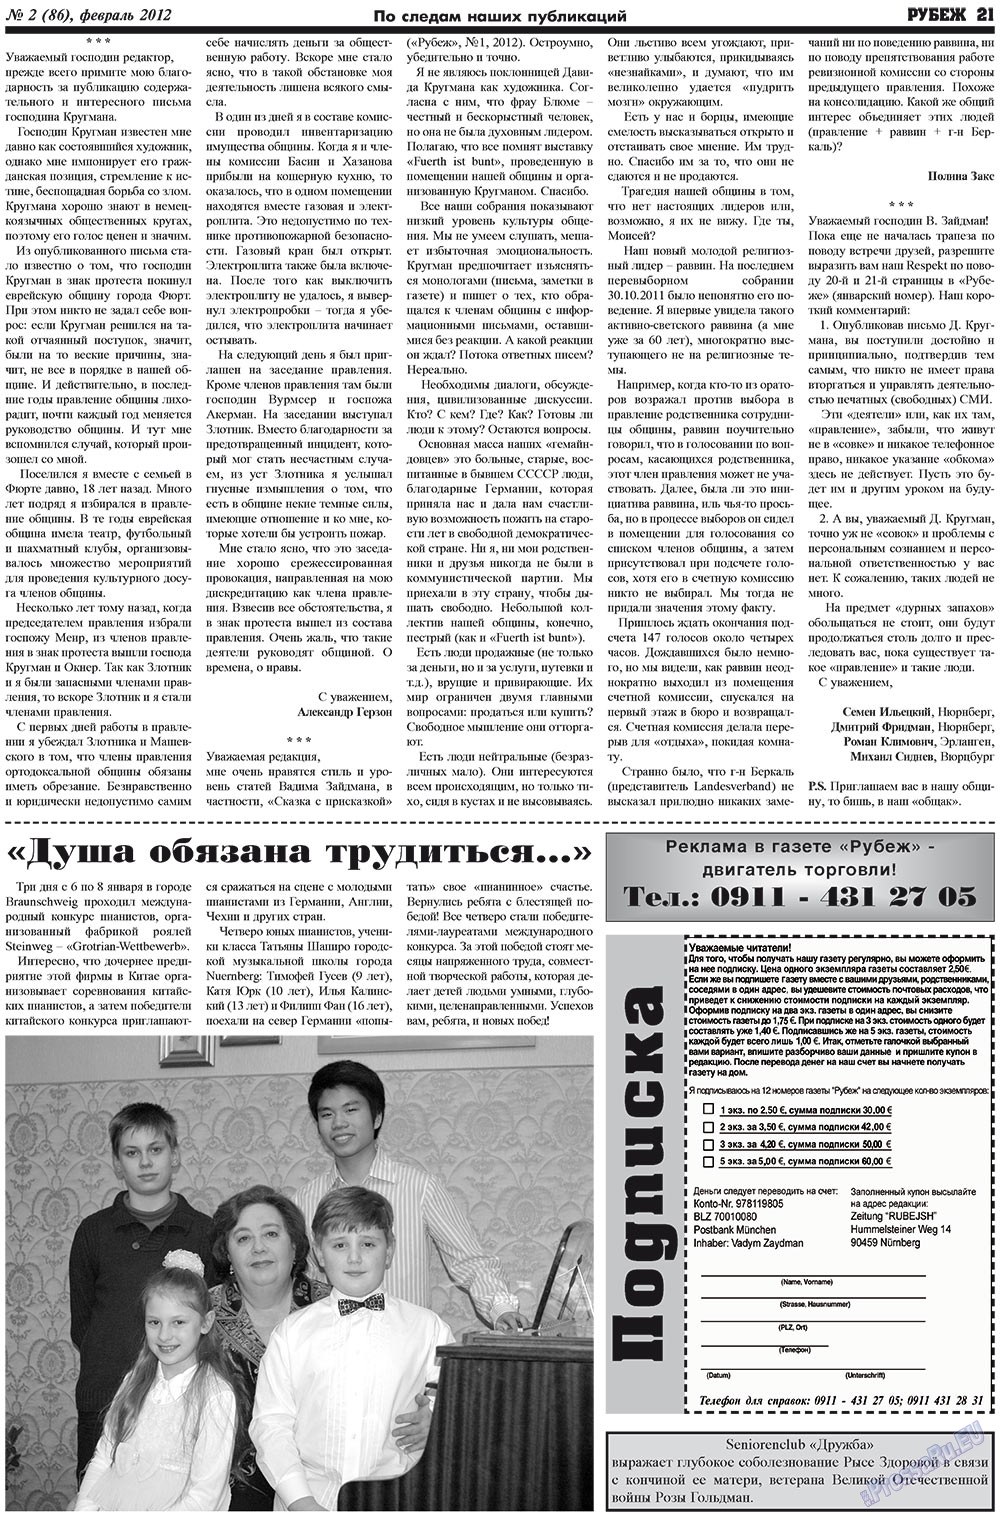 Рубеж, газета. 2012 №2 стр.21